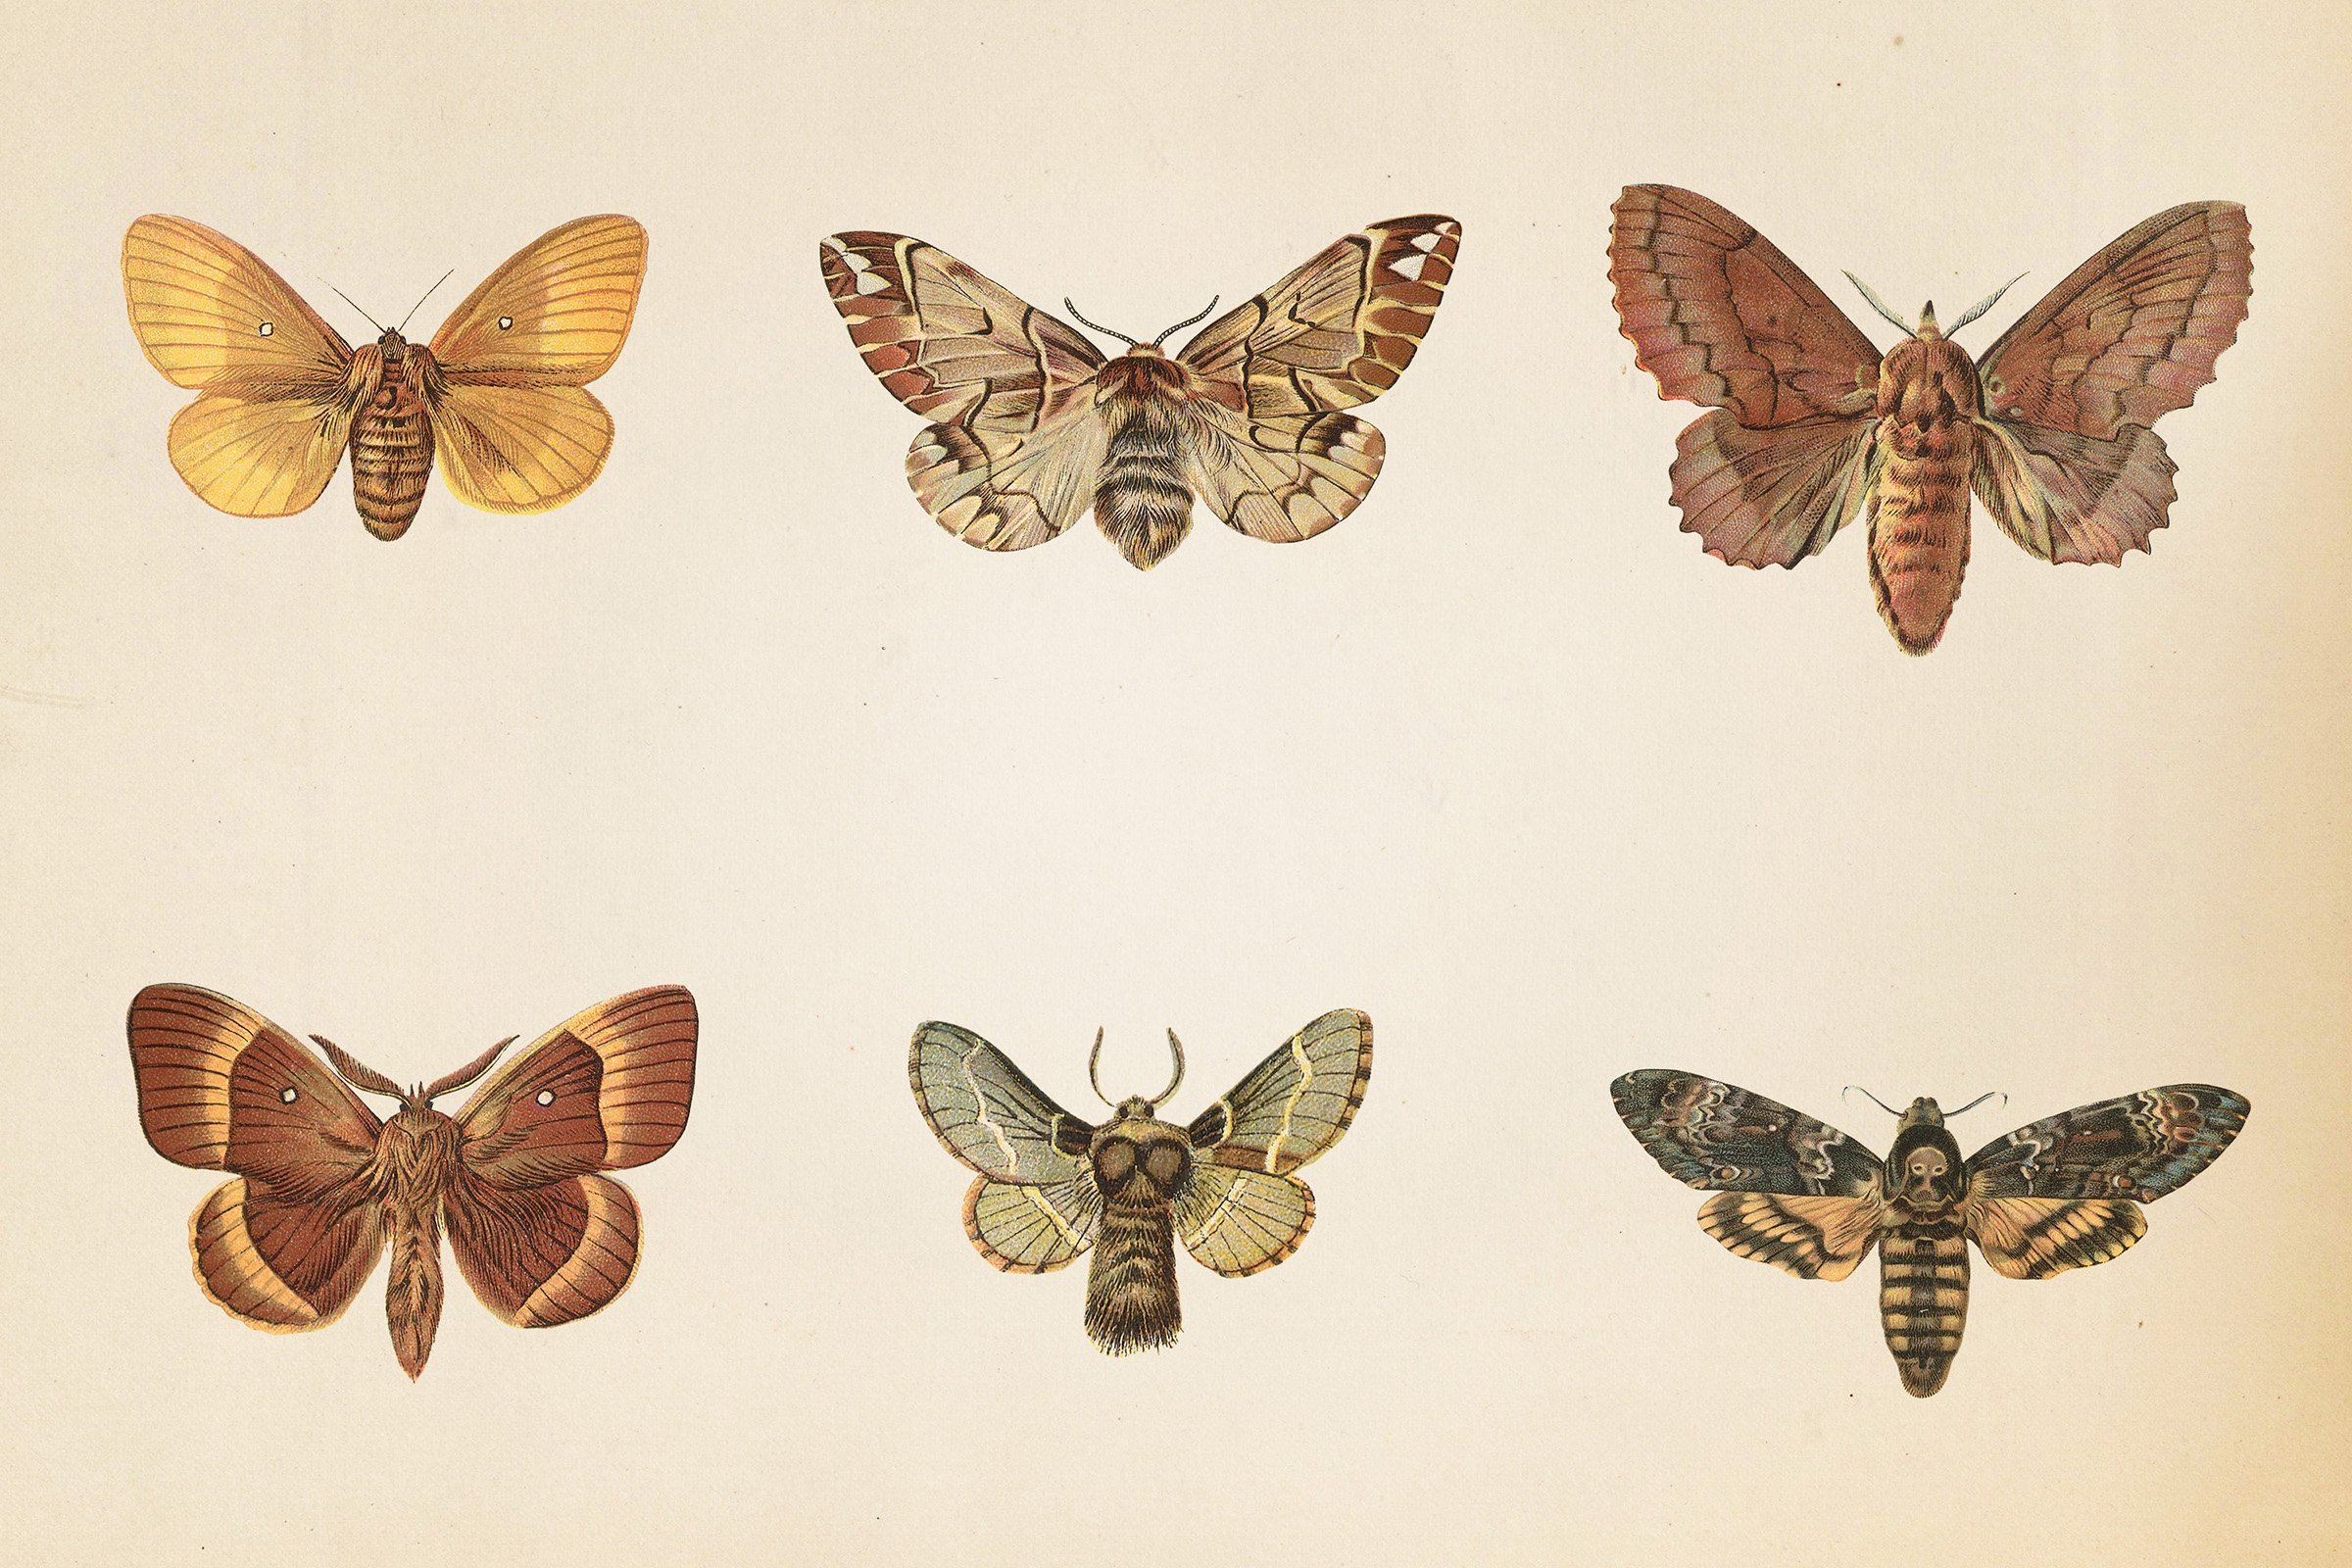 Vintage Moths Clipart preview image.